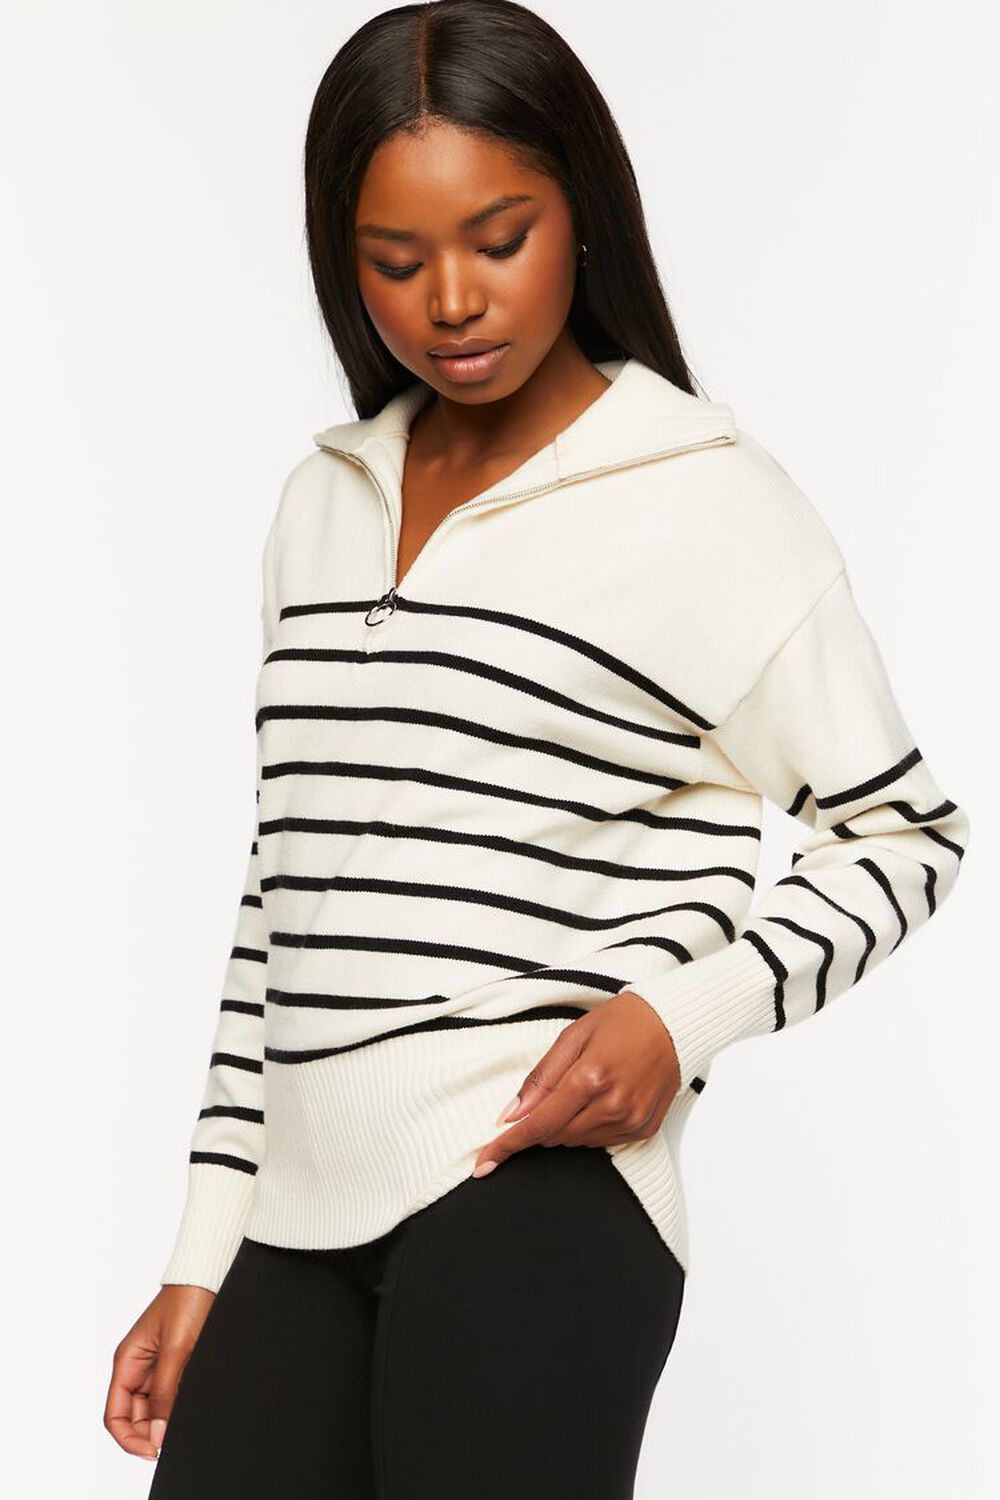 CREAM/BLACK Striped Half-Zip Sweater, image 2